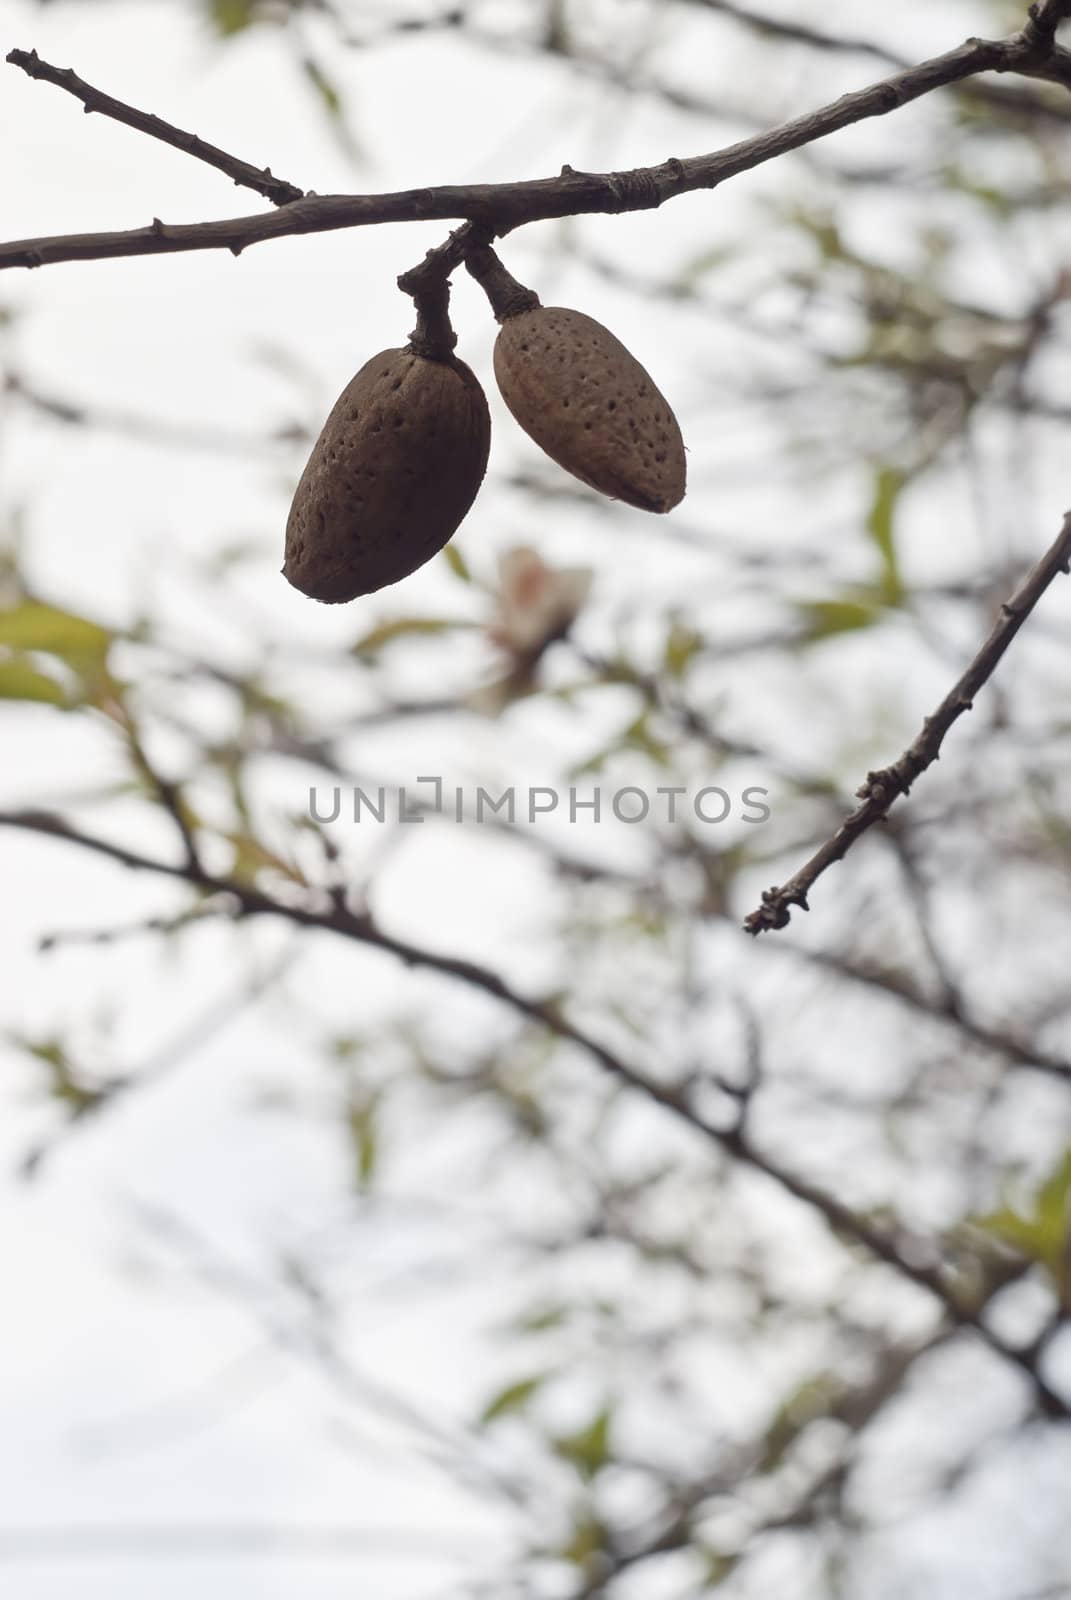 Almond tree with fruits by gandolfocannatella